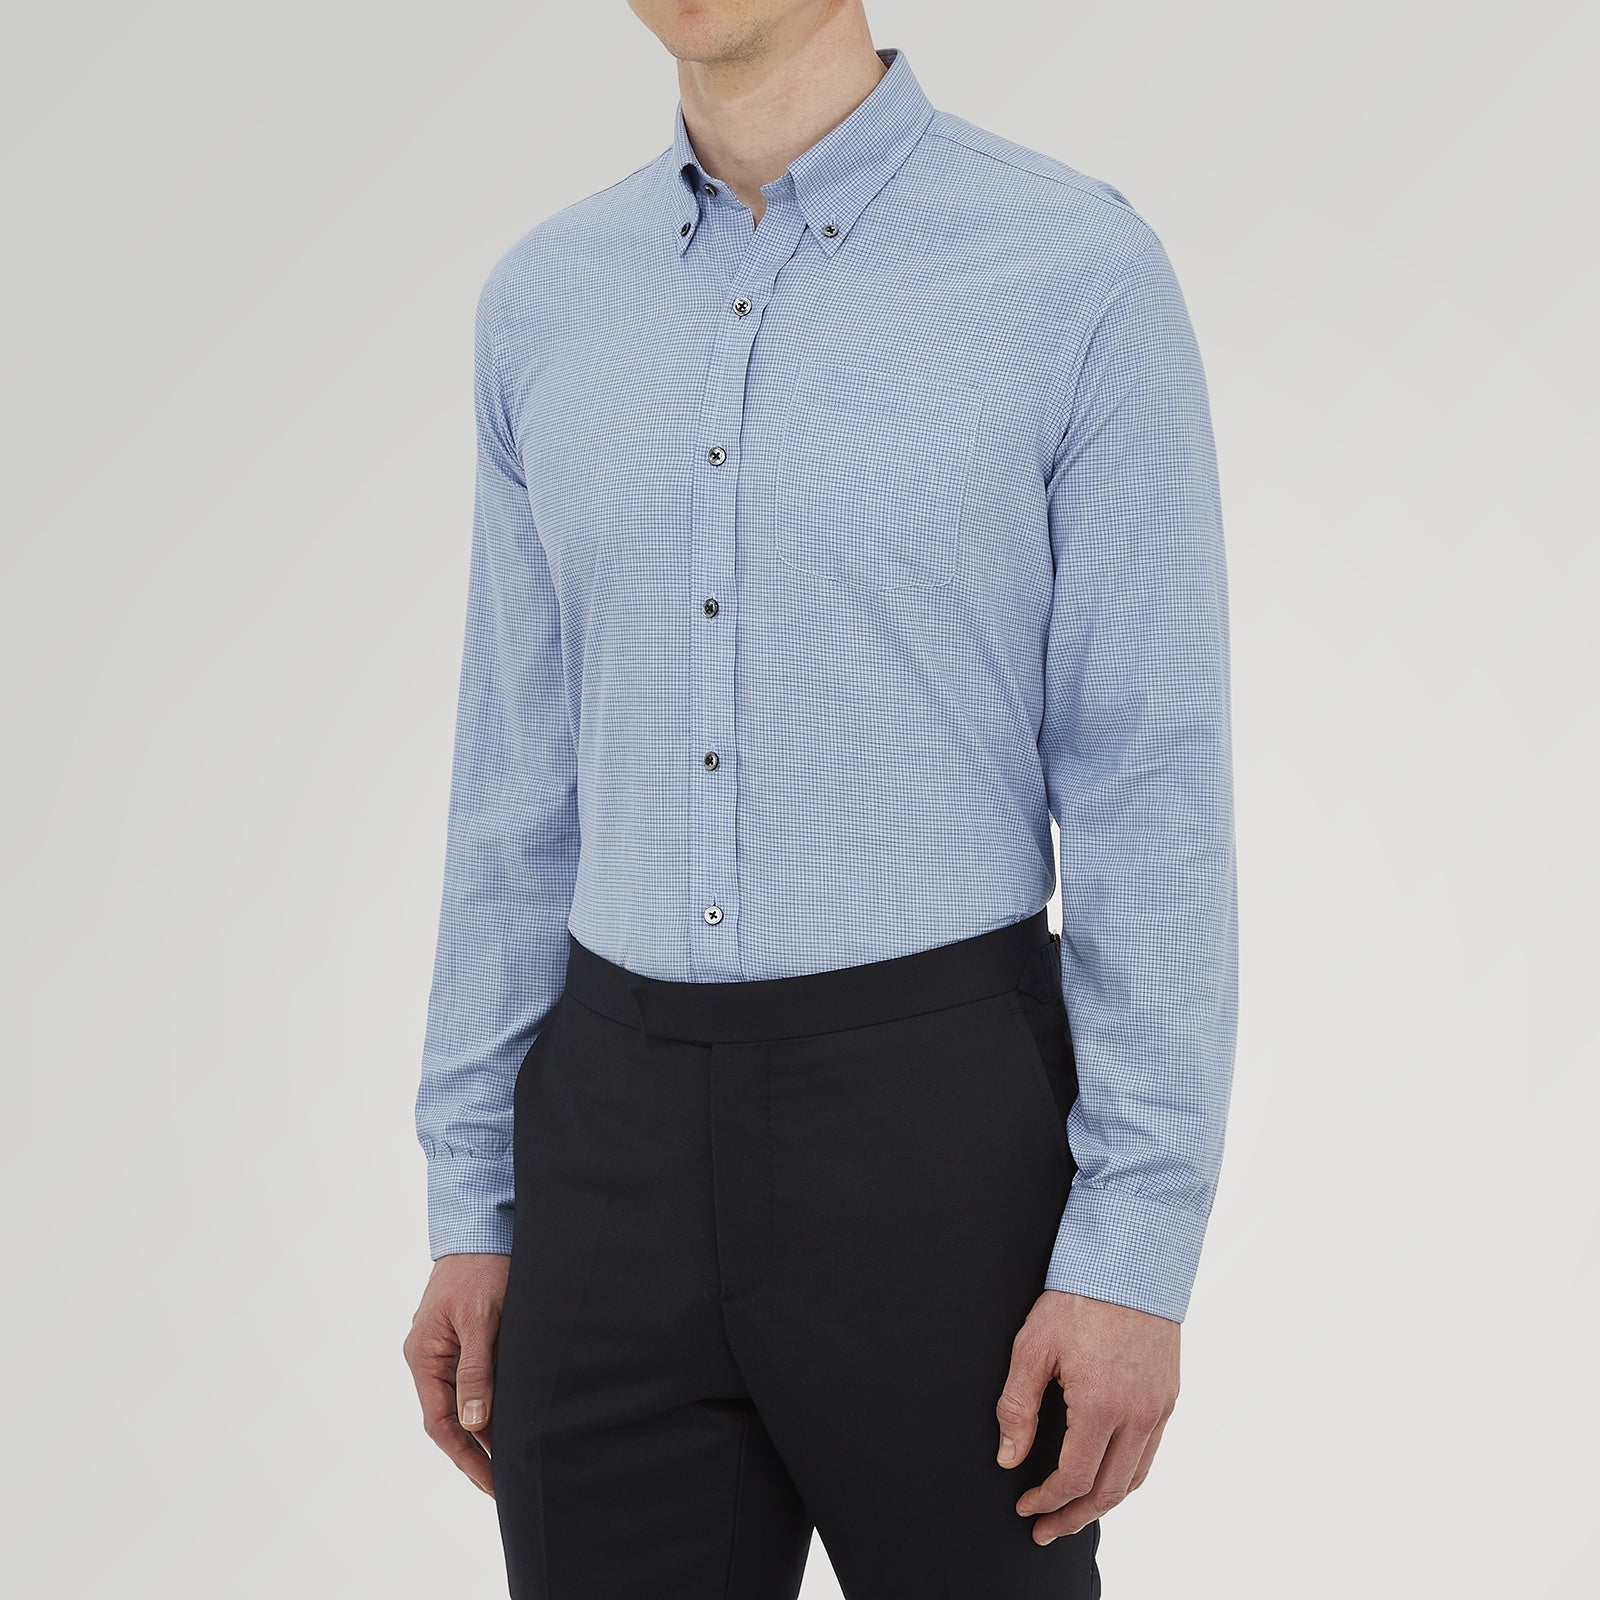 Weekend Fit Blue Cashmerello Light Shirt with Dorset Collar and 1-Button Cuffs